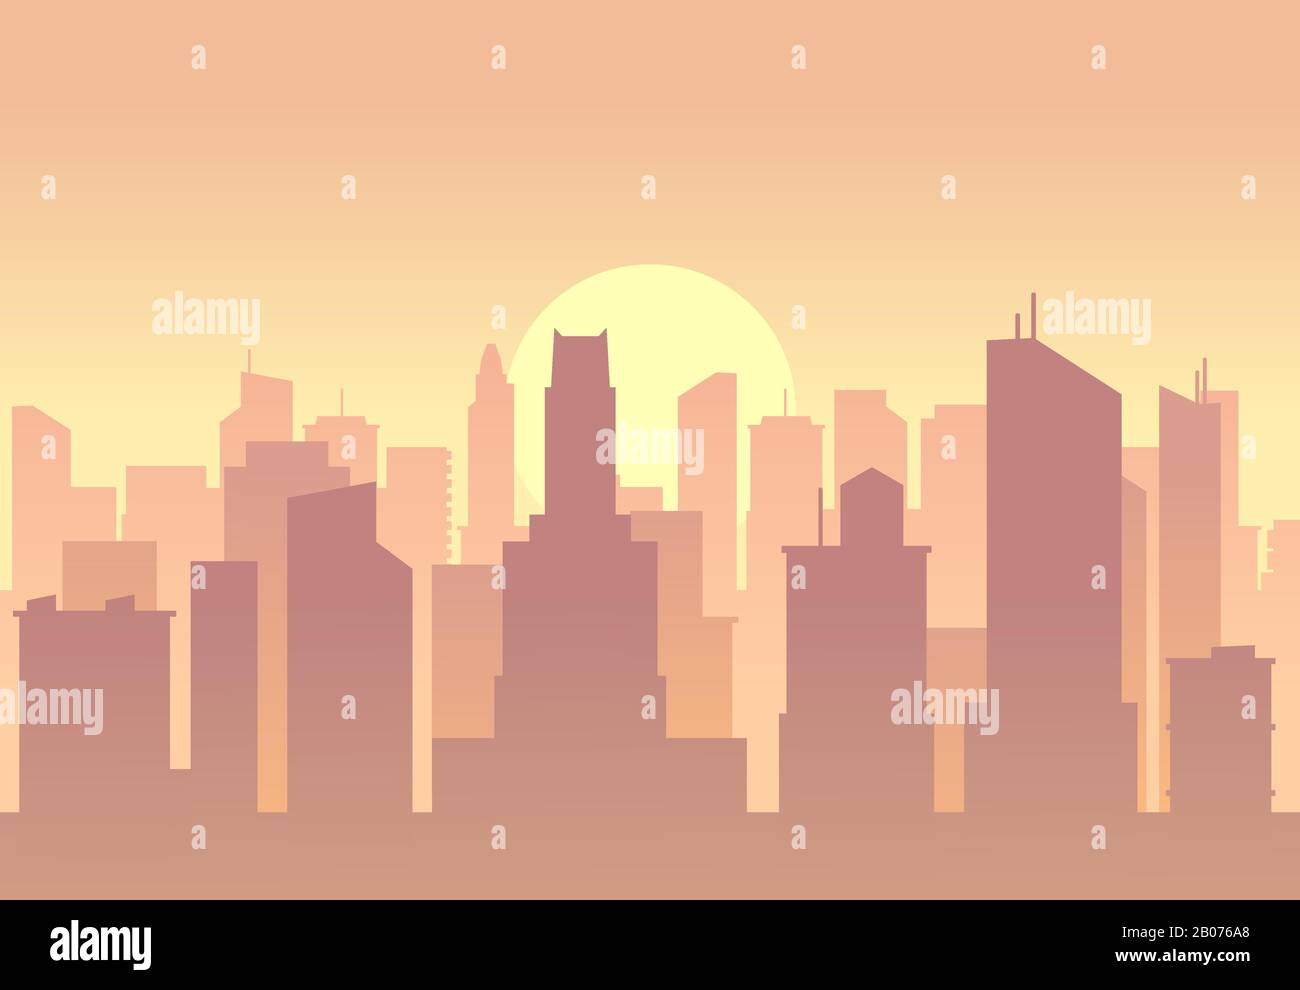 Vector City flache Skyline. Abbildung: Urbanes Panorama - Sonnenaufgang oder Sonnenuntergang Stock Vektor